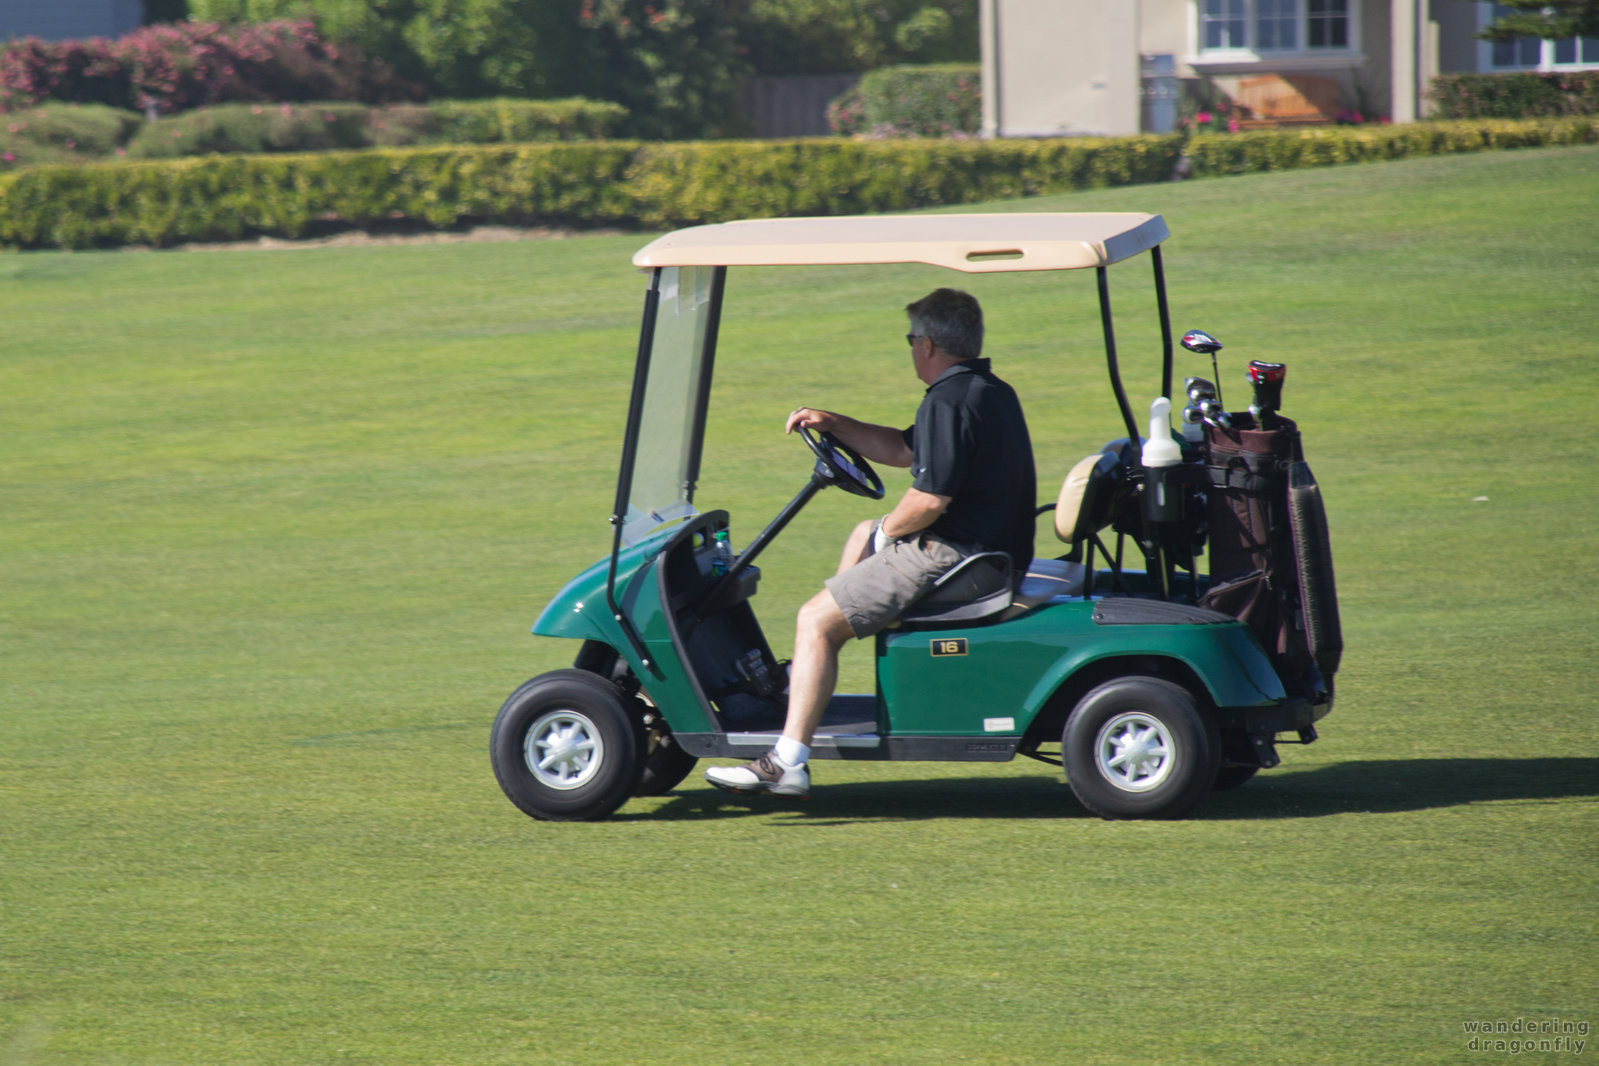 Some prefer golf cars over walking -- golf car, golf course, golf set, golfer, grass